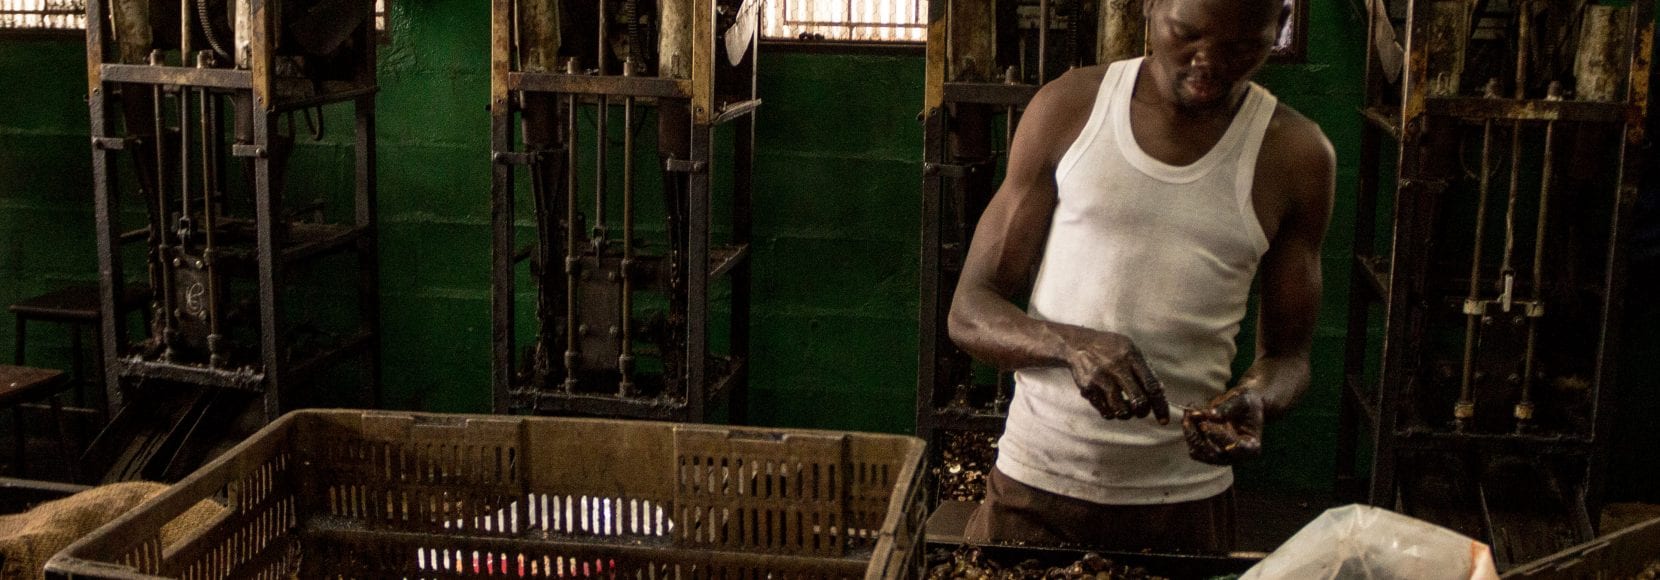 Worker hand processing cashews at Mozacaju facility